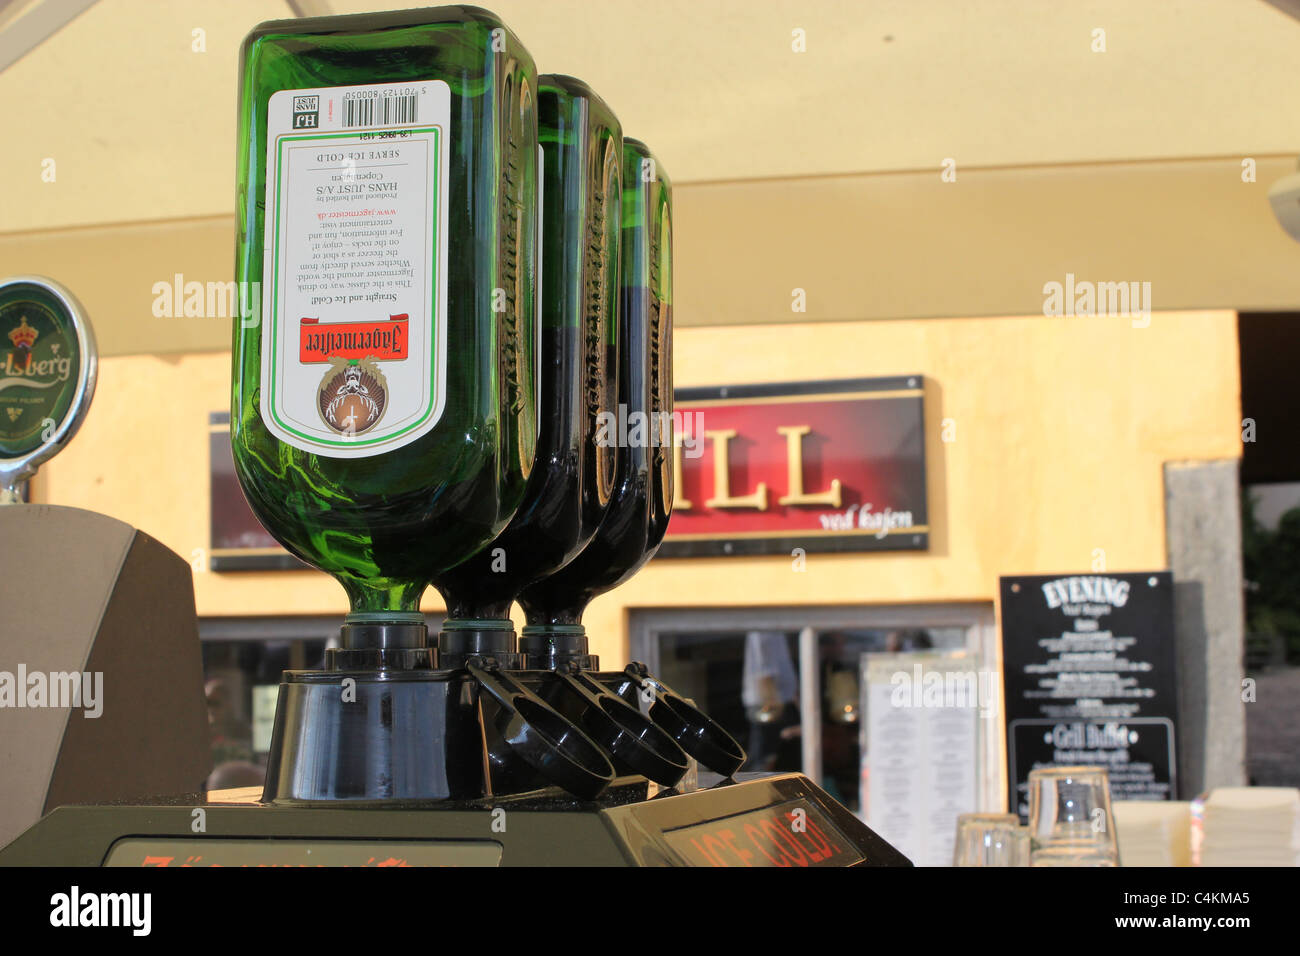 Bottles of Jägermeister in a bar Stock Photo